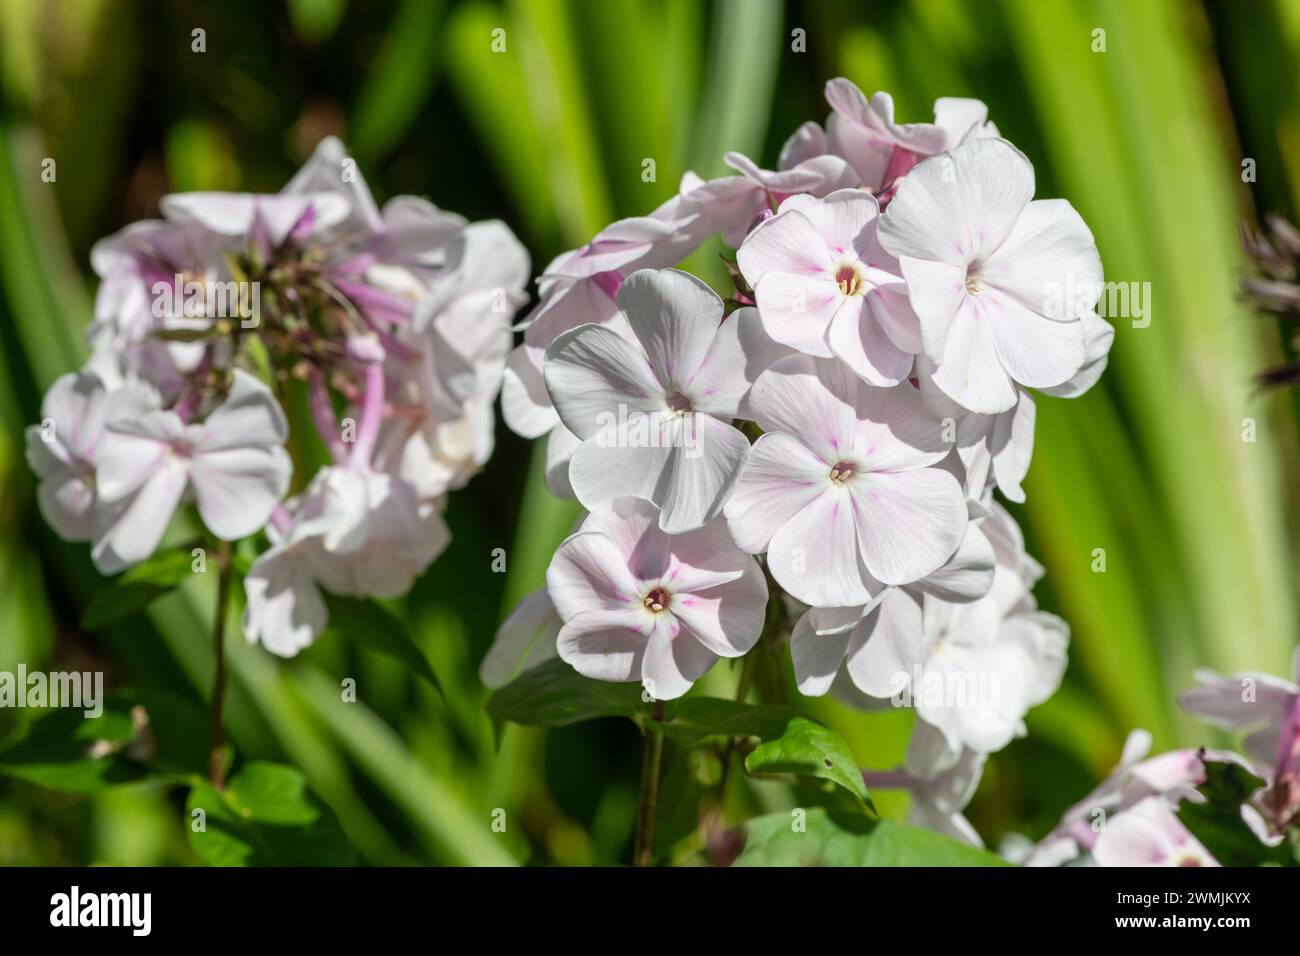 Close up of white garden phlox (phlox paniculata) flowers in bloom Stock Photo